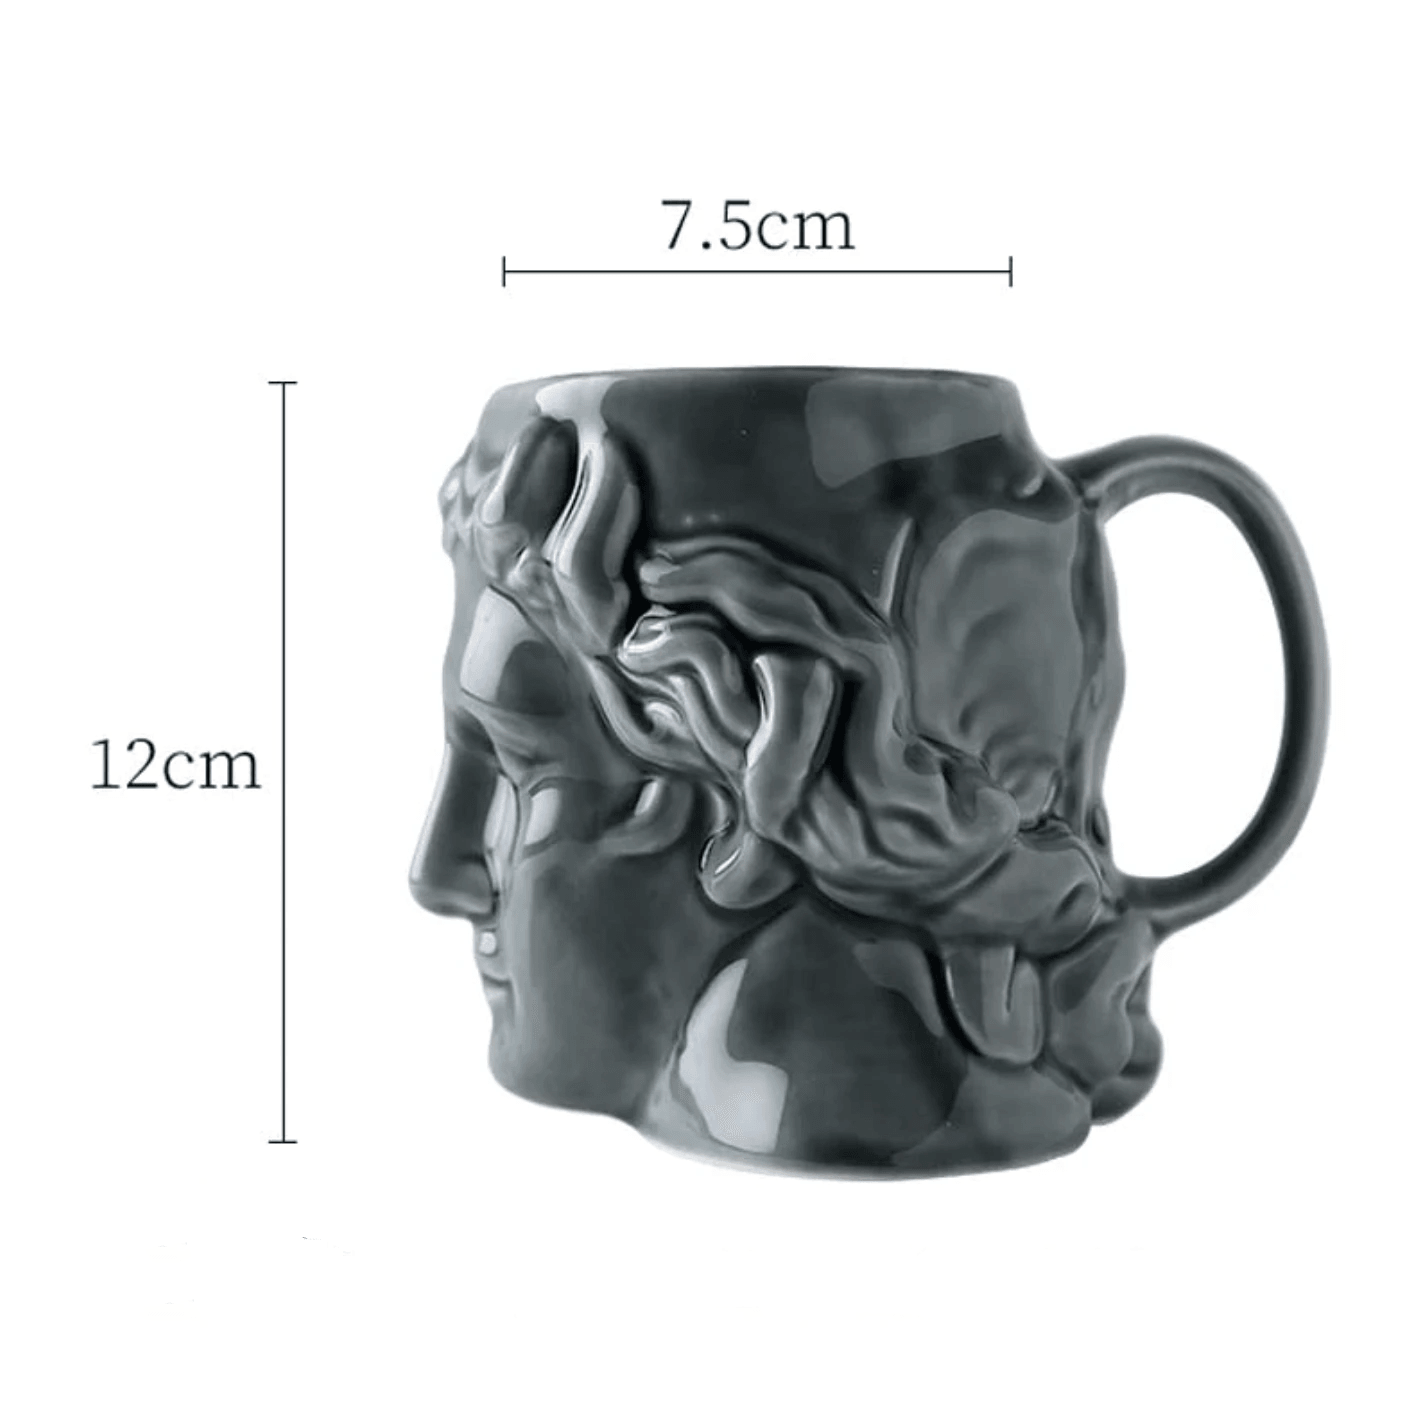 Mugs David's Head Ceramic Porcelain Mug sold by Fleurlovin, Free Shipping Worldwide